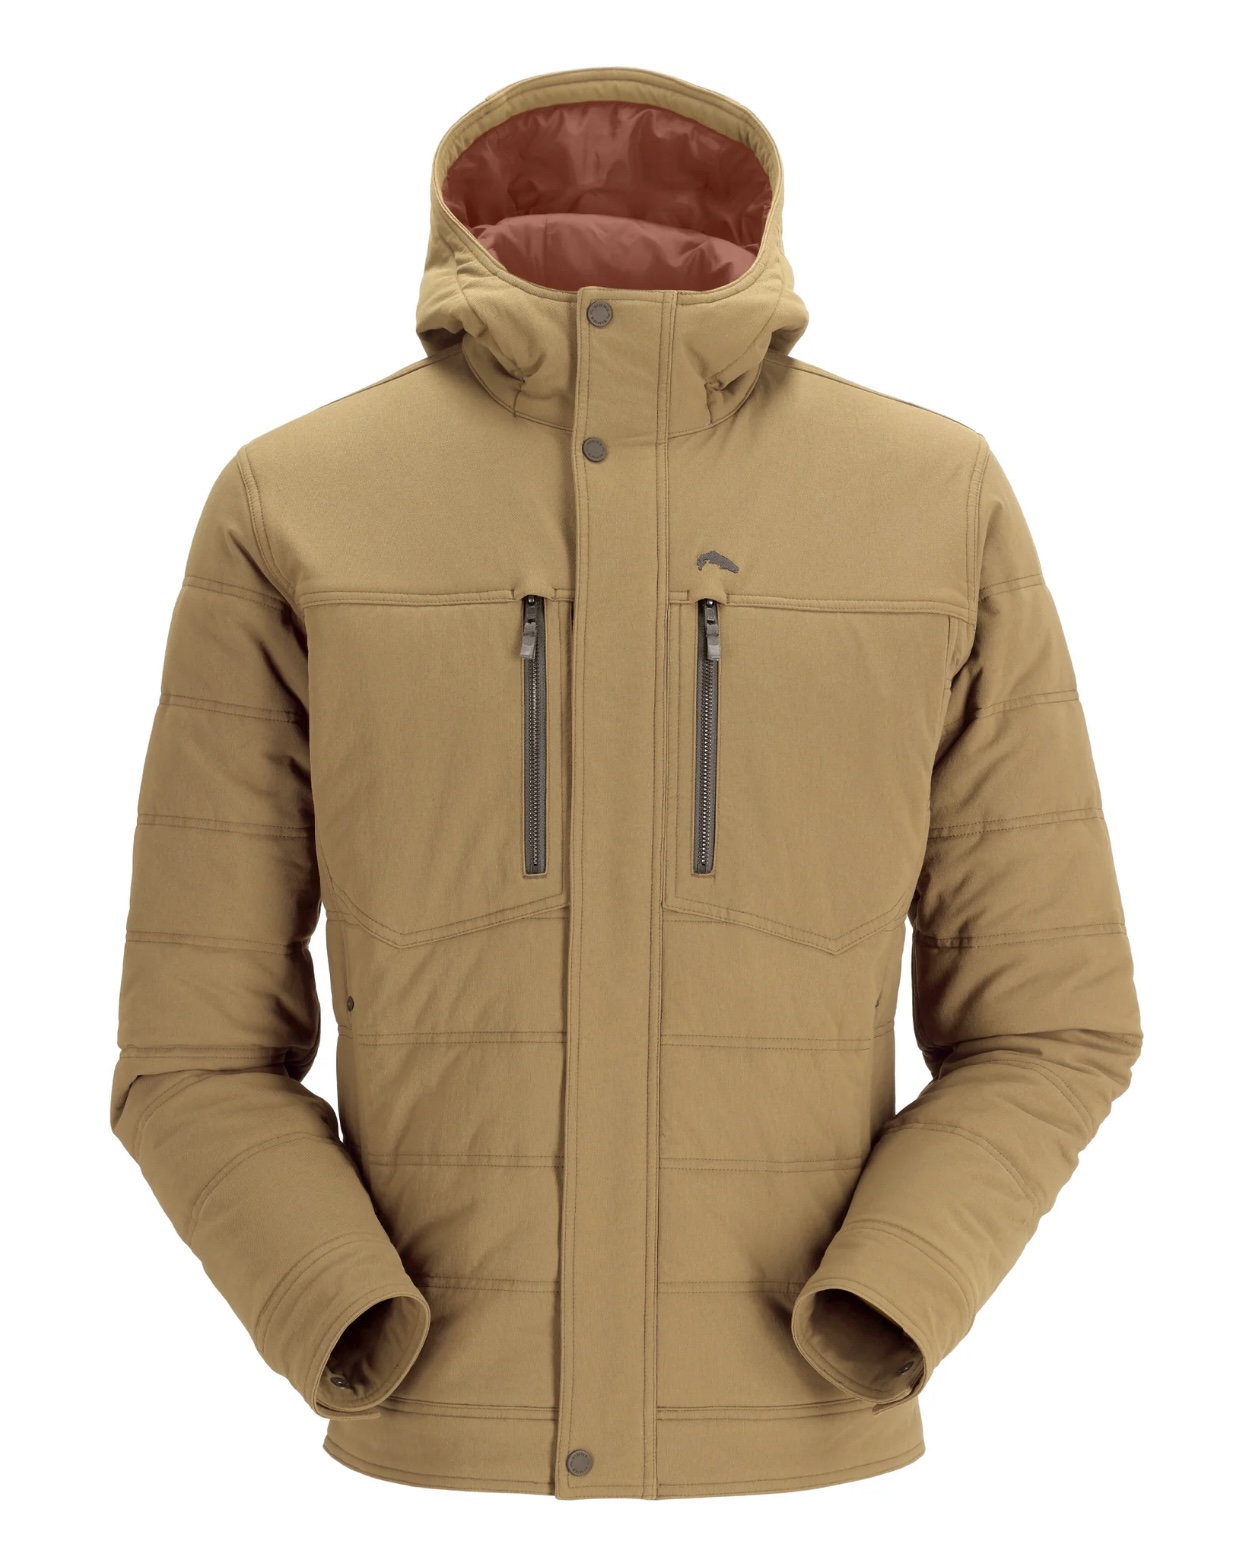 Simms M's Cardwell Hooded Jacket - Camel - Medium